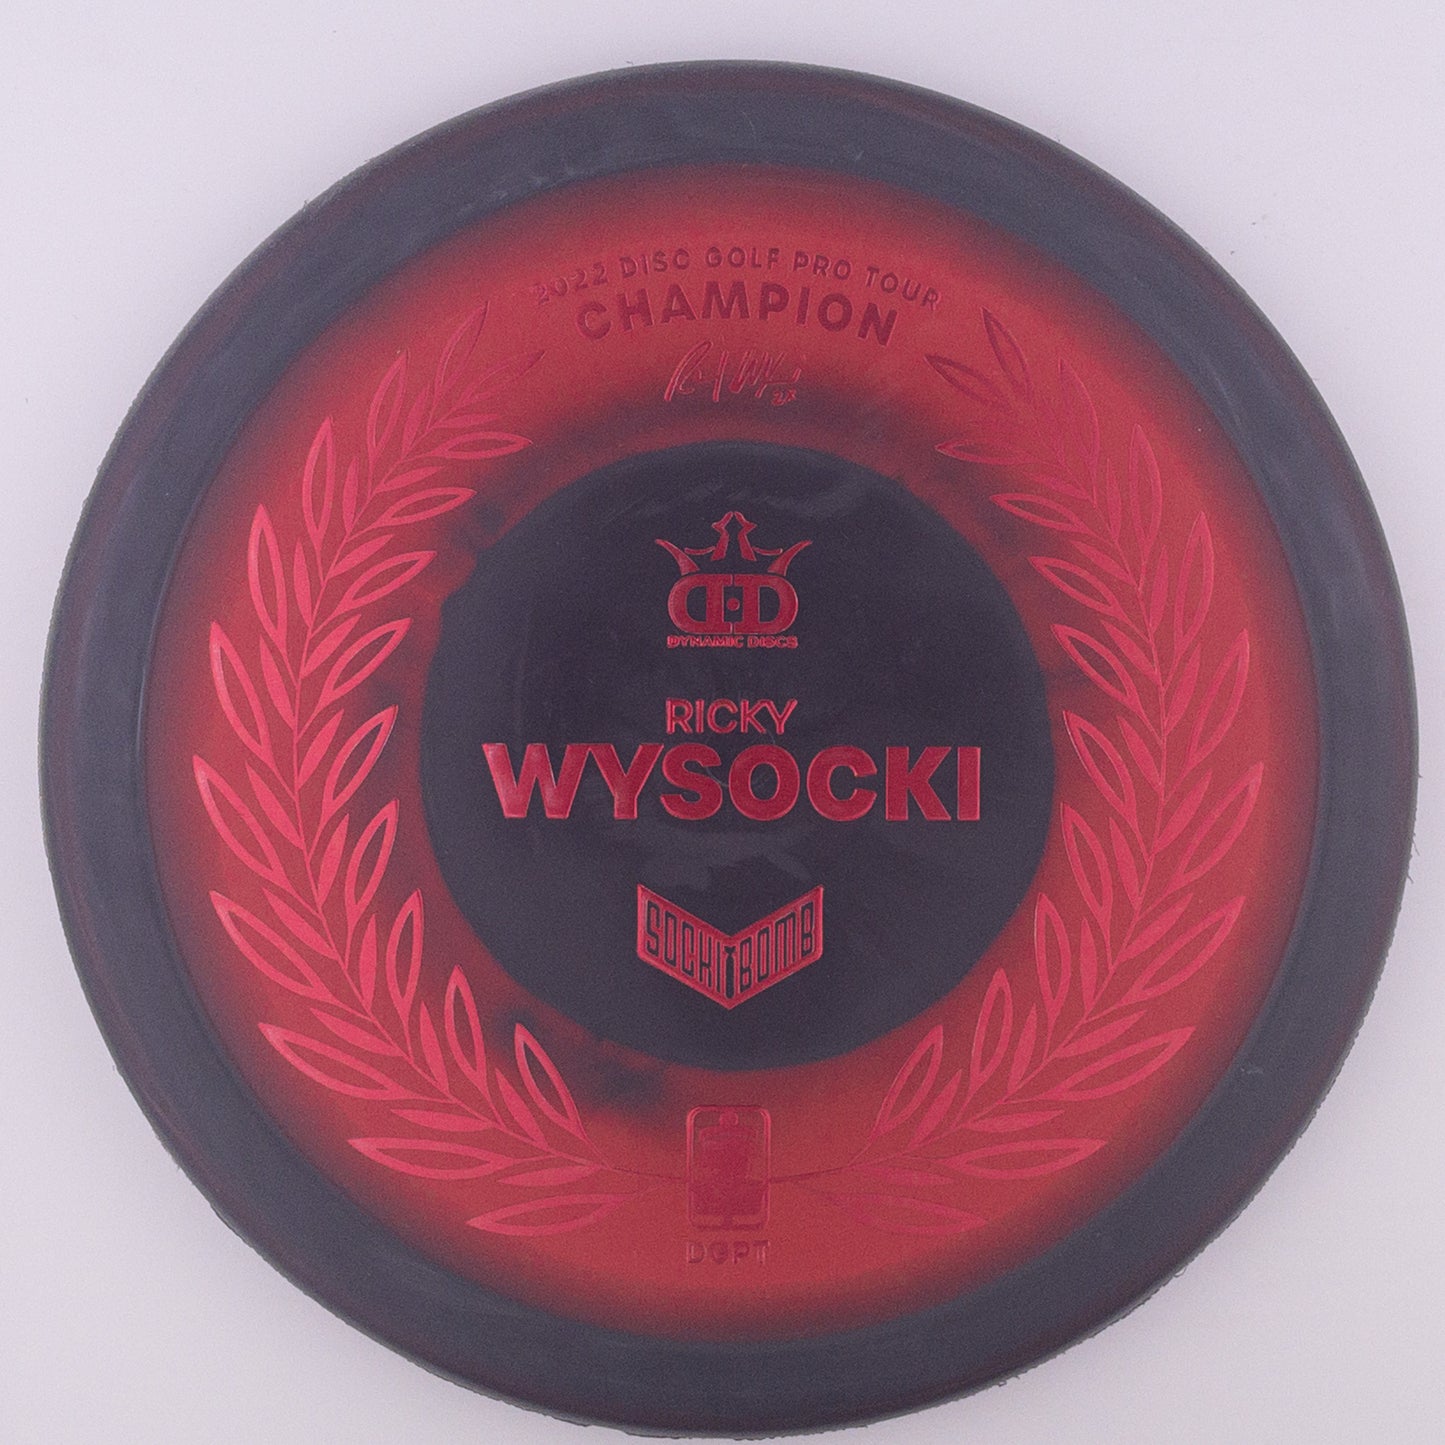 Dynamic Discs Classic Supreme Orbit Sockibomb Slammer - Wysocki DGPT Champion